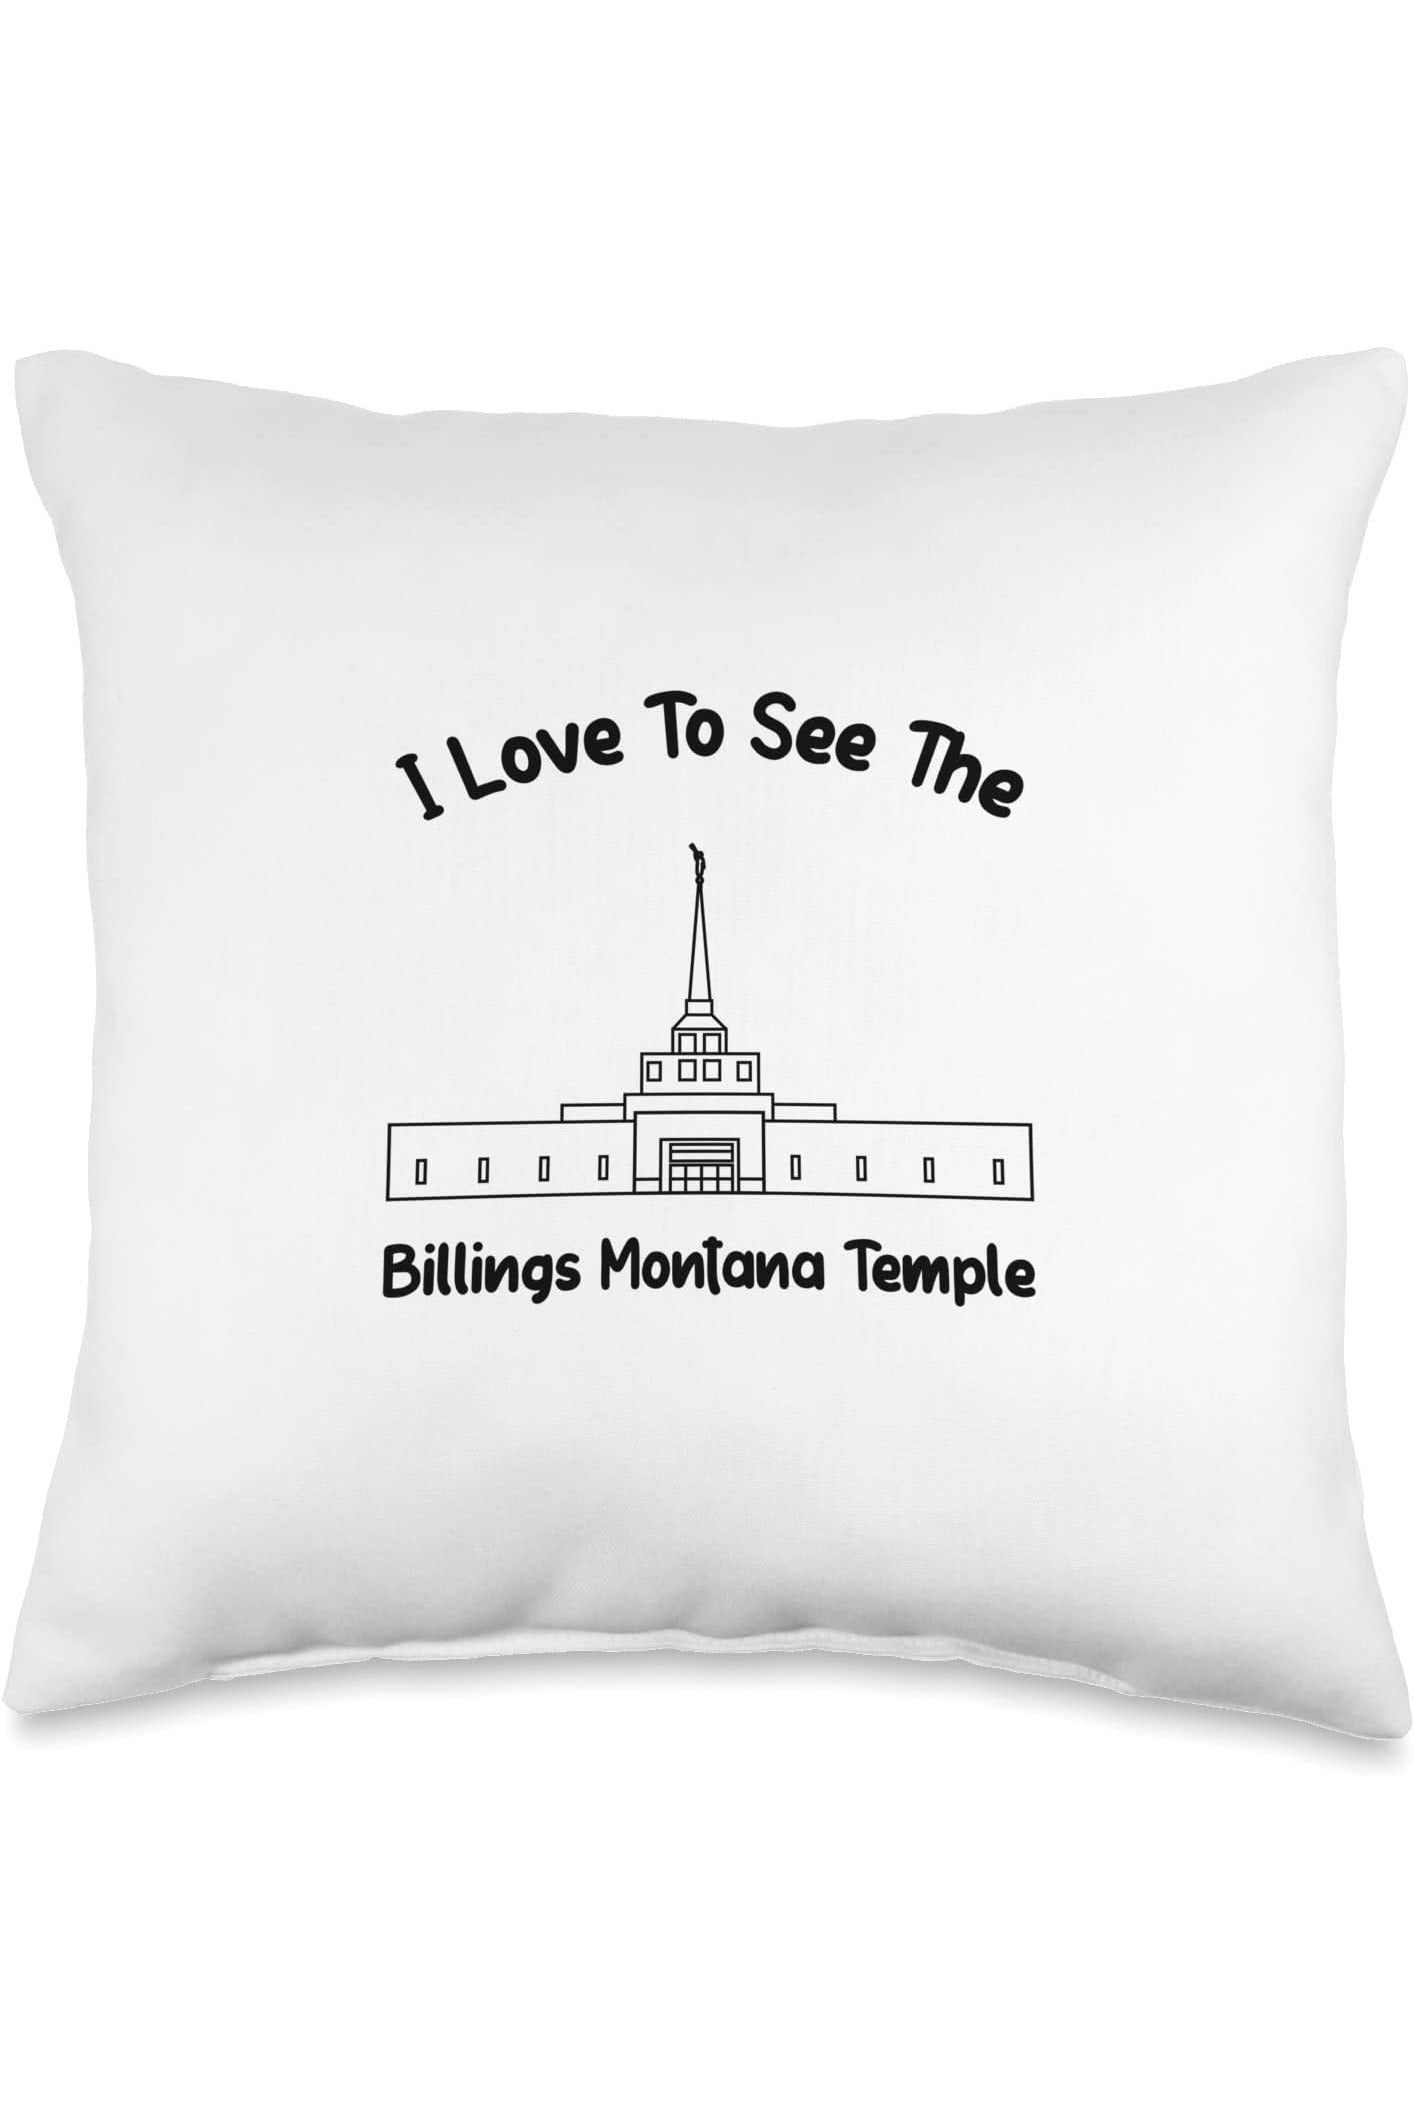 Billings Montana Temple Throw Pillows -  Style (English) US